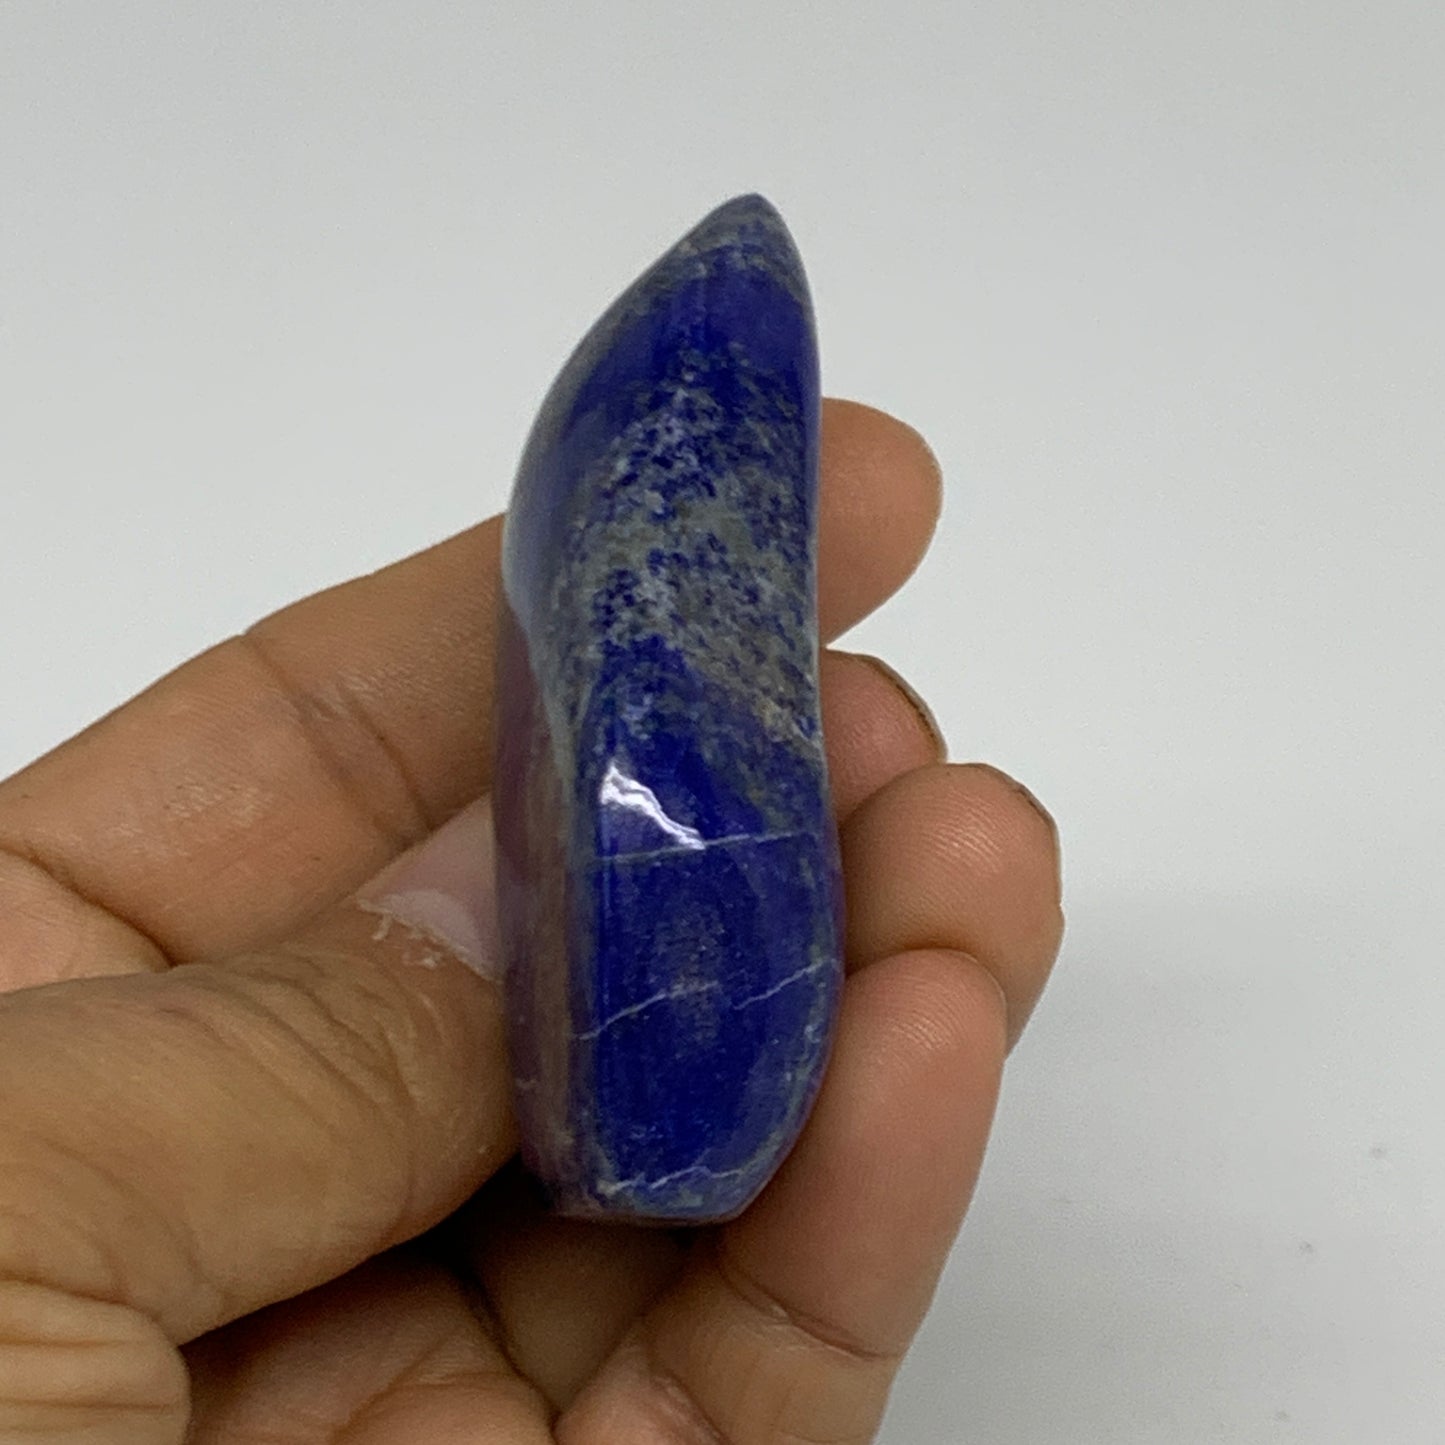 62.9g, 2.5"x1.5"x0.7",  Natural Freeform Lapis Lazuli from Afghanistan, B33098